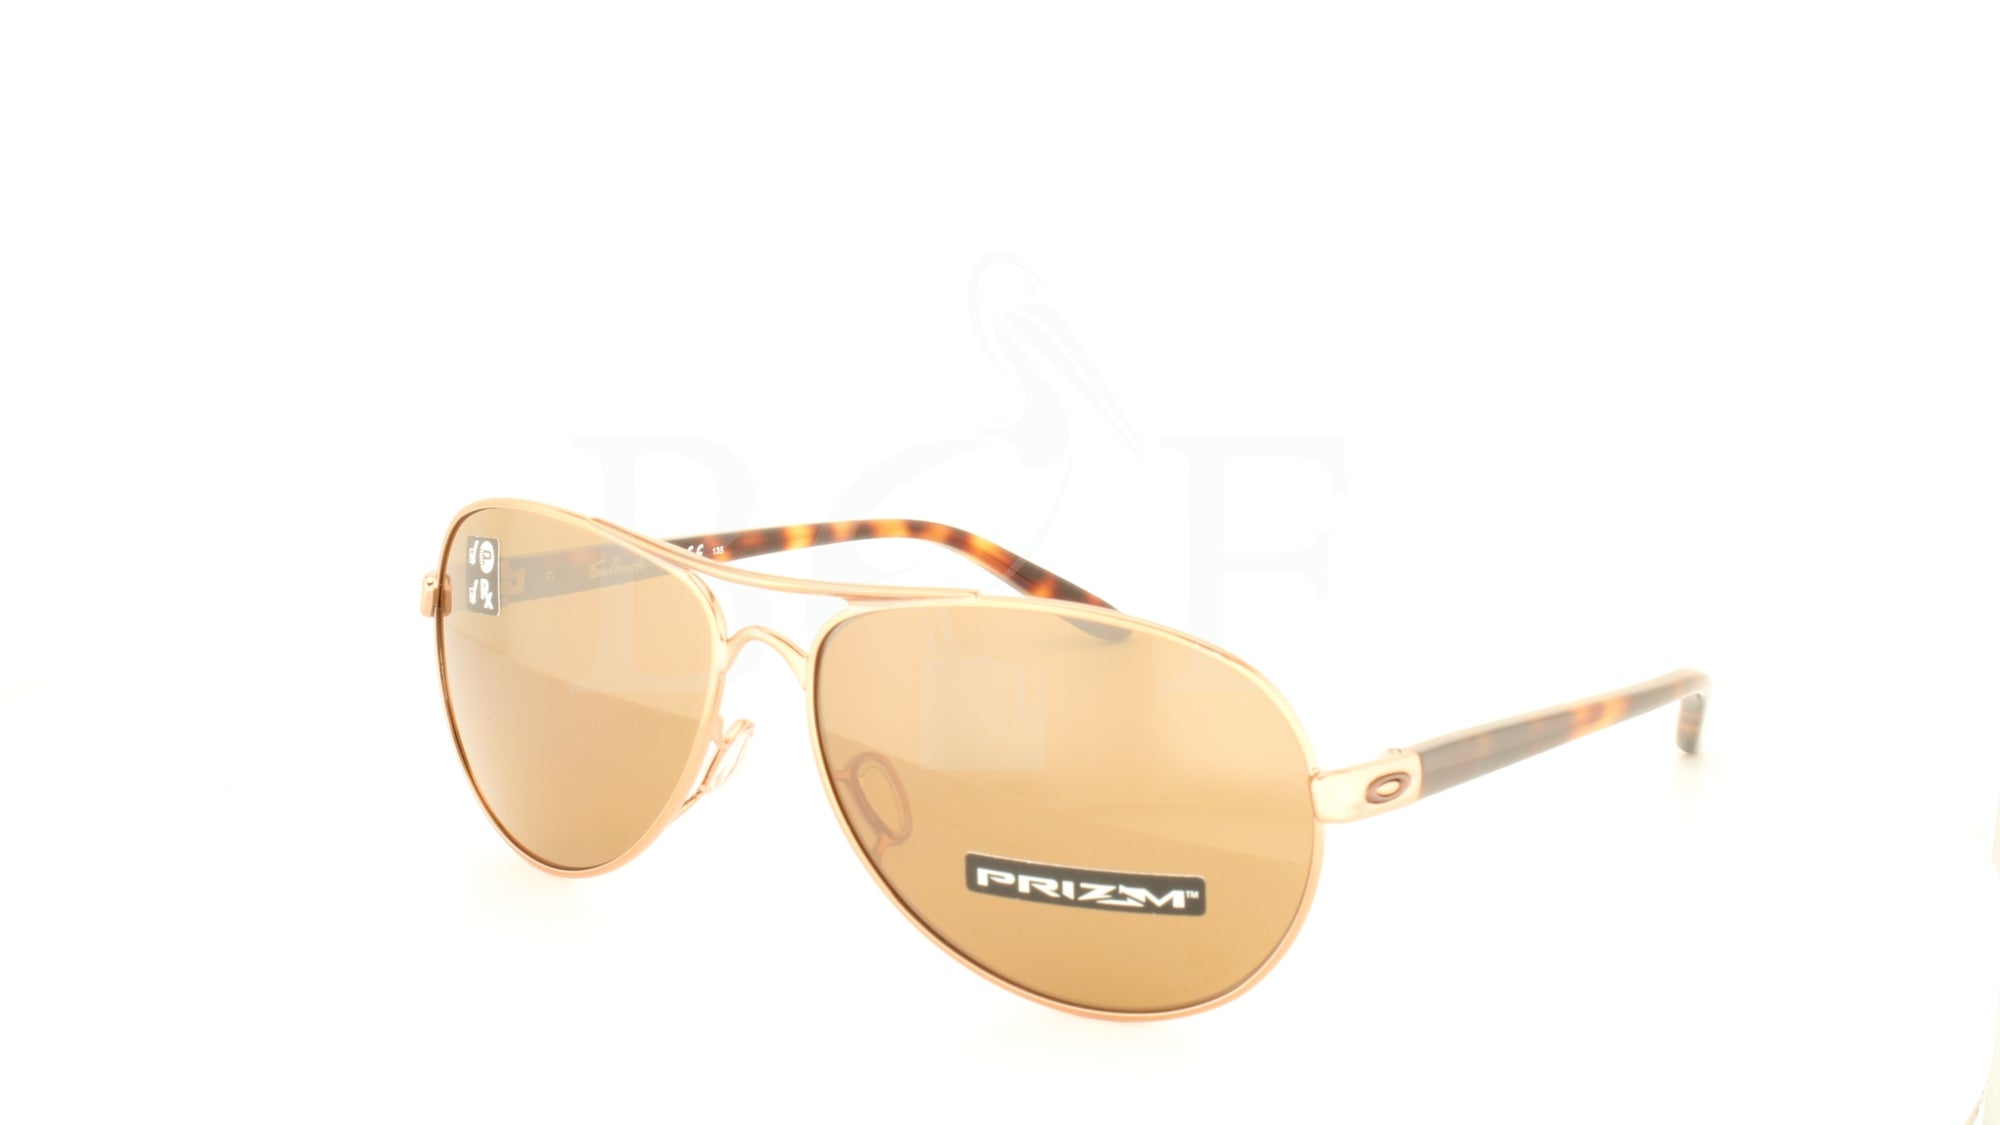 Sunglasses Oakley FEEDBACK (OO4079-31) - Beachfitters Sunglass Shoppe